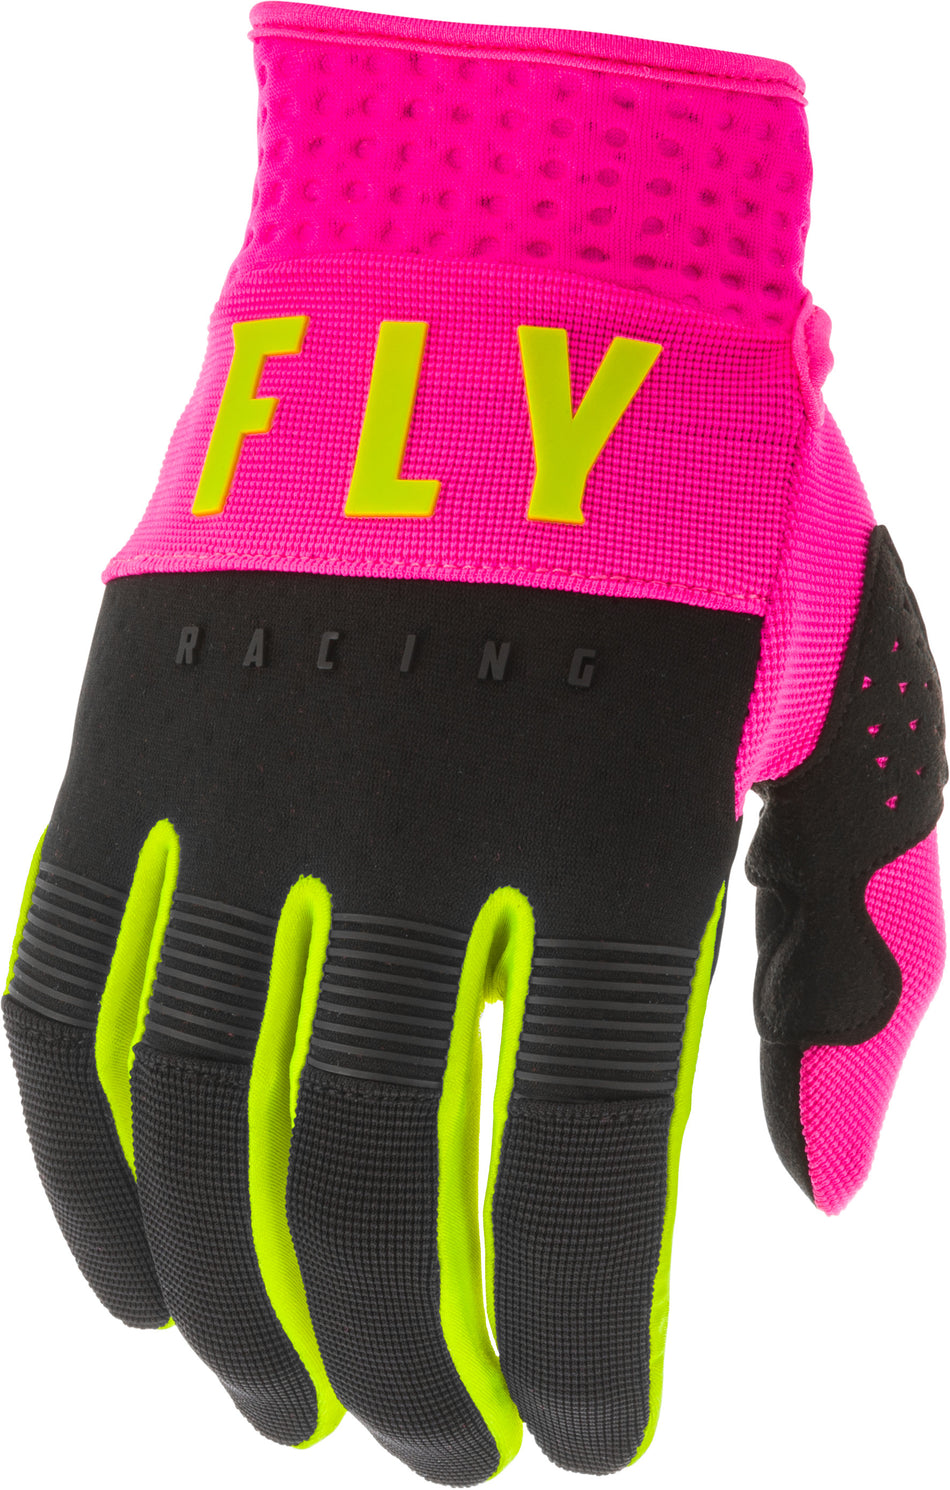 FLY RACING F-16 Gloves Neon Pink/Black/Hi-Vis Sz 12 373-91612